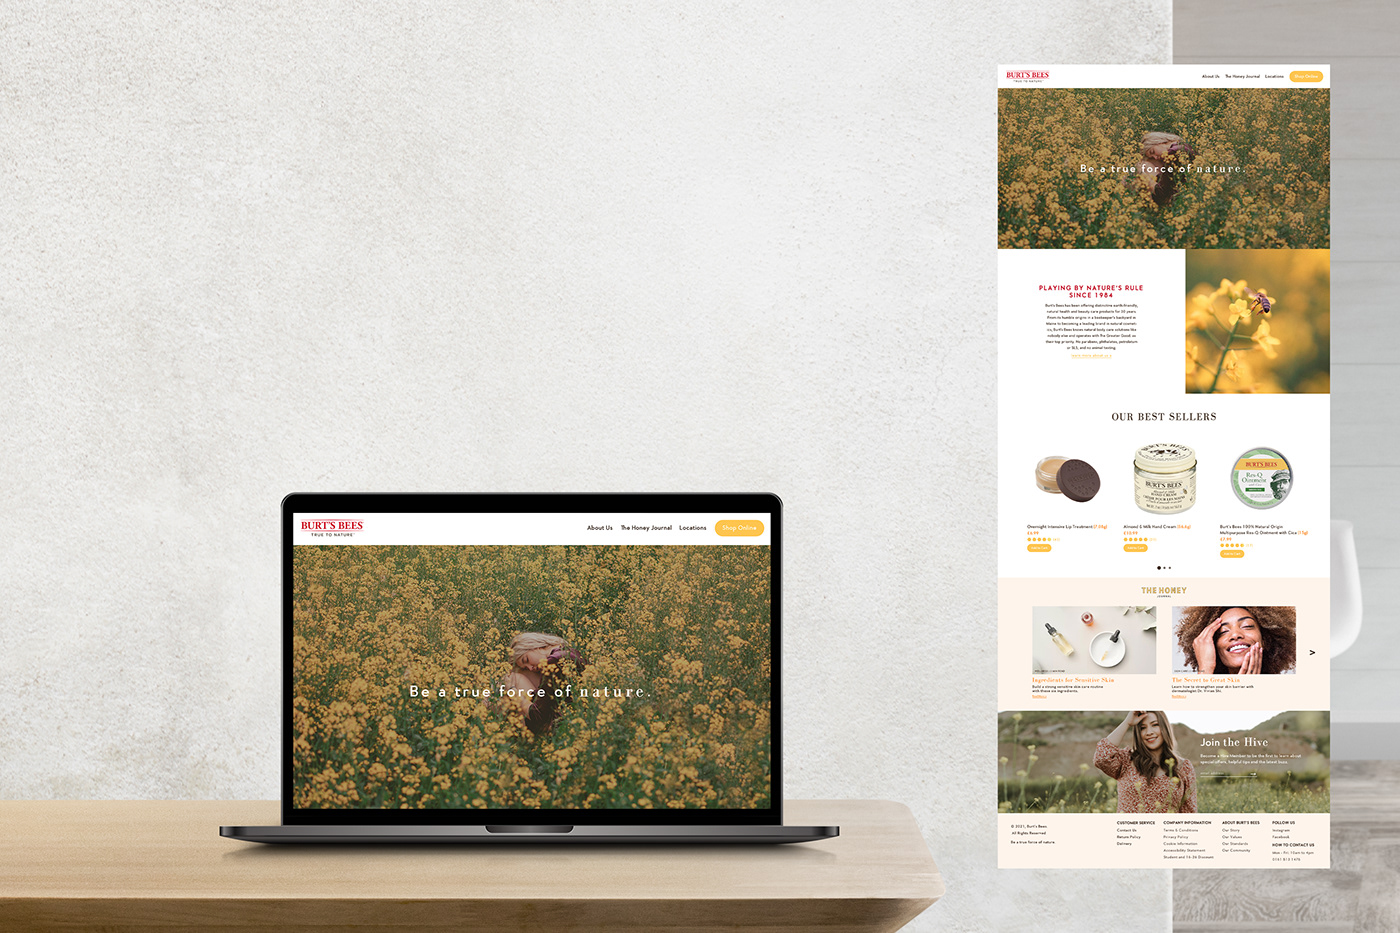 burt's bees concept redesign Web Design  Website landing page